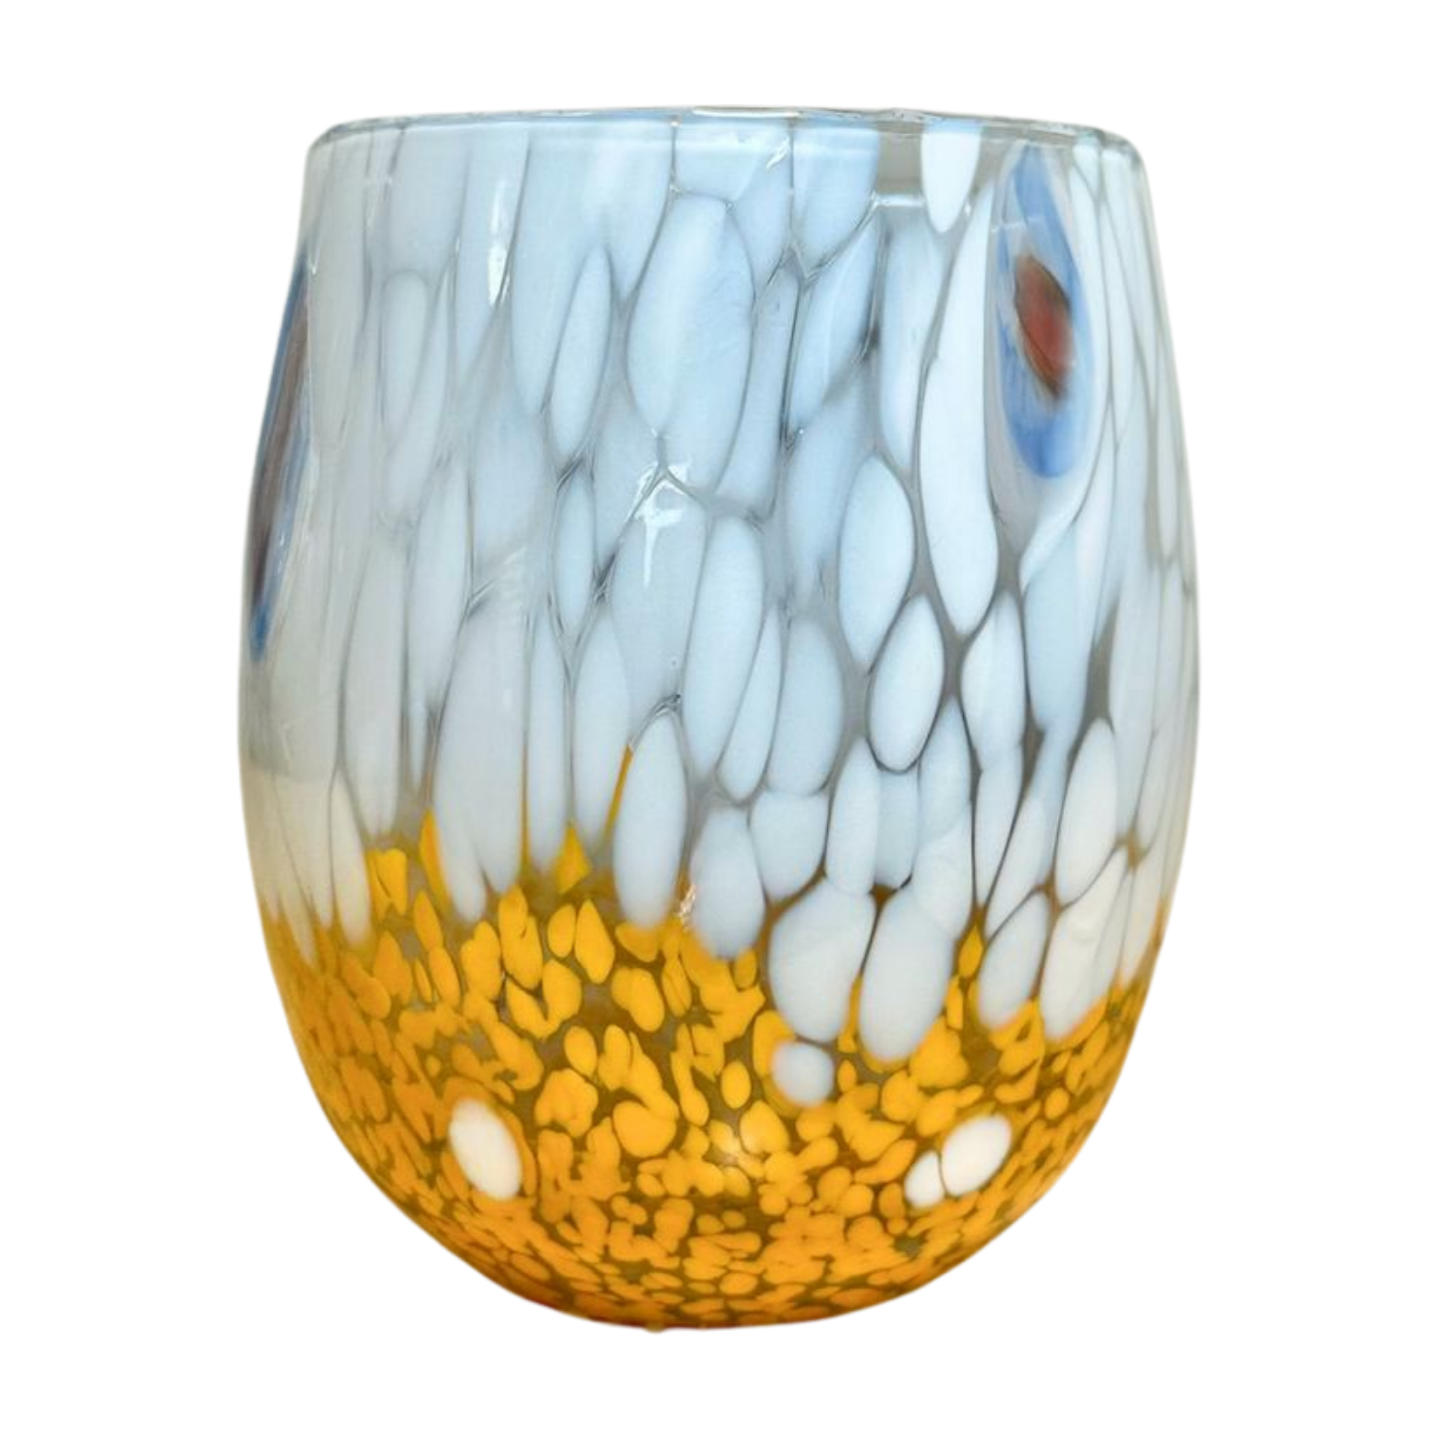 Stemless Murano Wine Glass, Two-Tone shown in yellow.